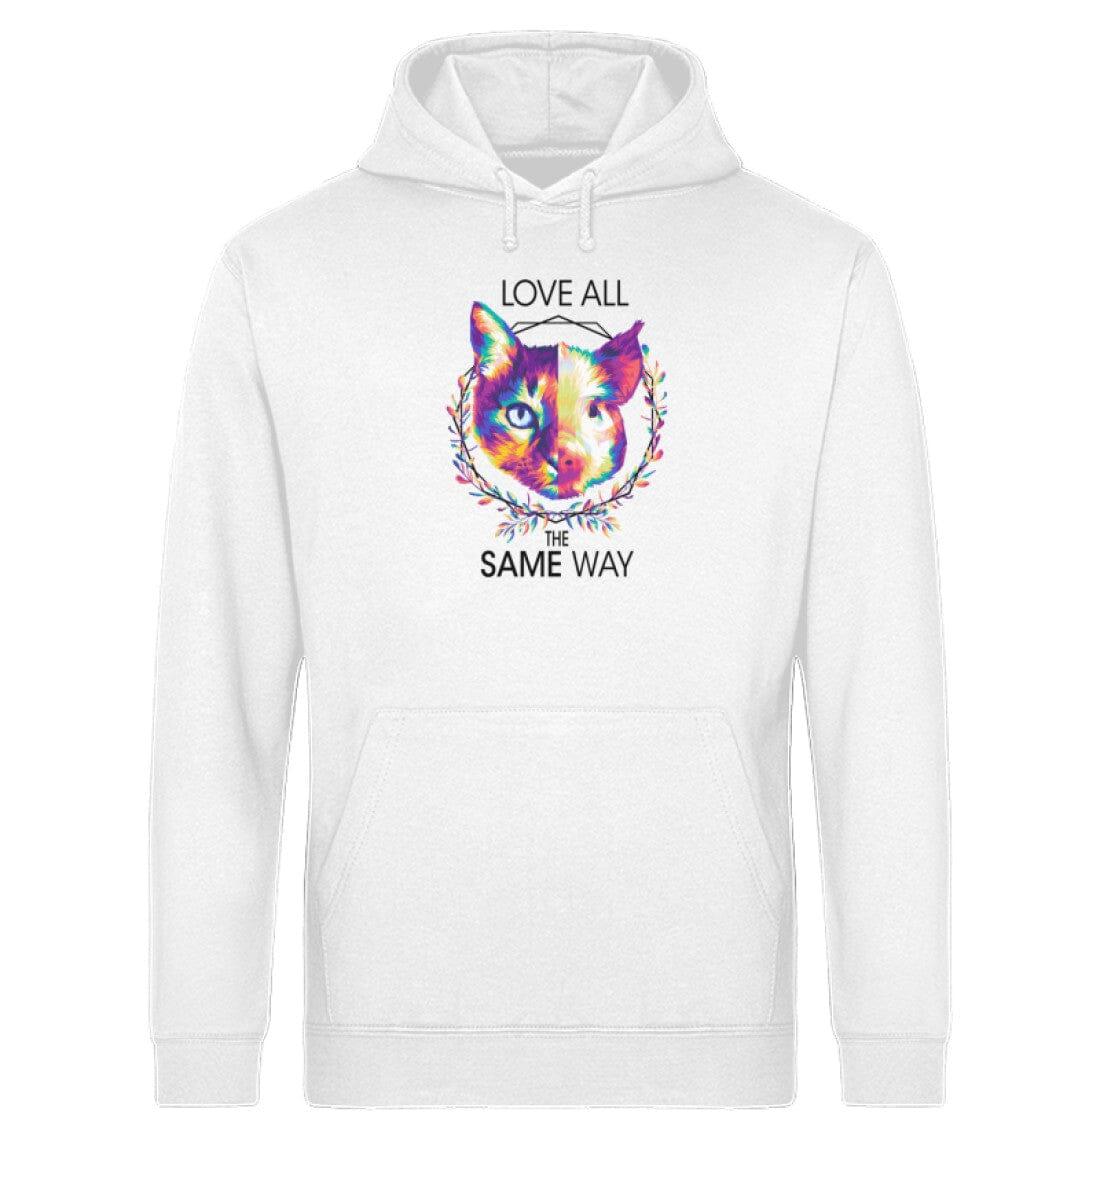 Love all the same way - Unisex Organic Hoodie - Team Vegan © vegan t shirt